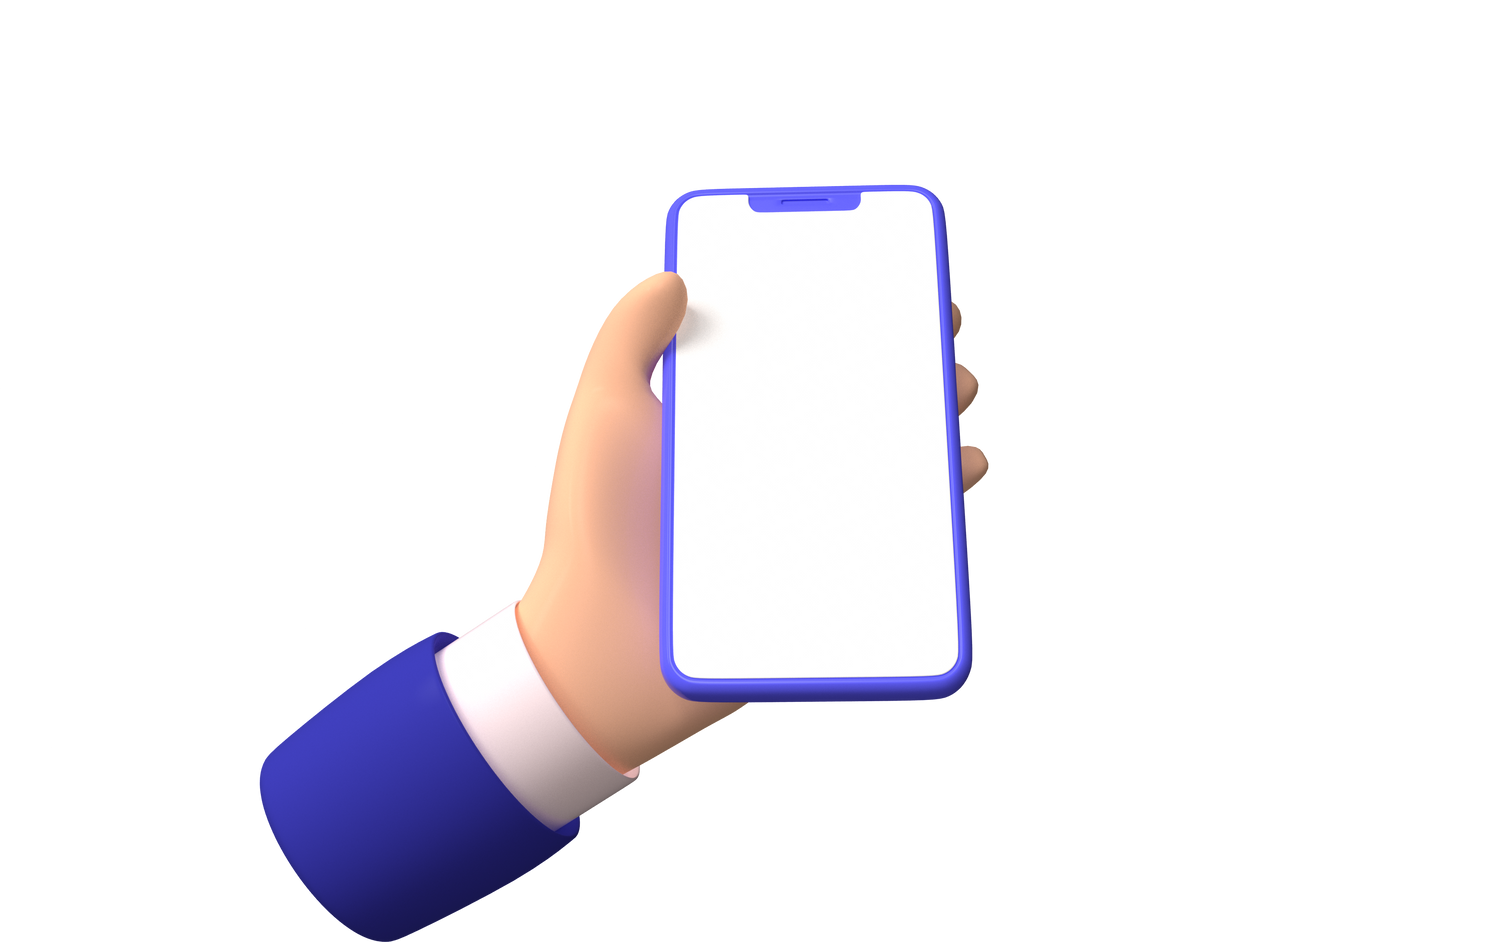 3D Cartoon hand holding smartphone isolated